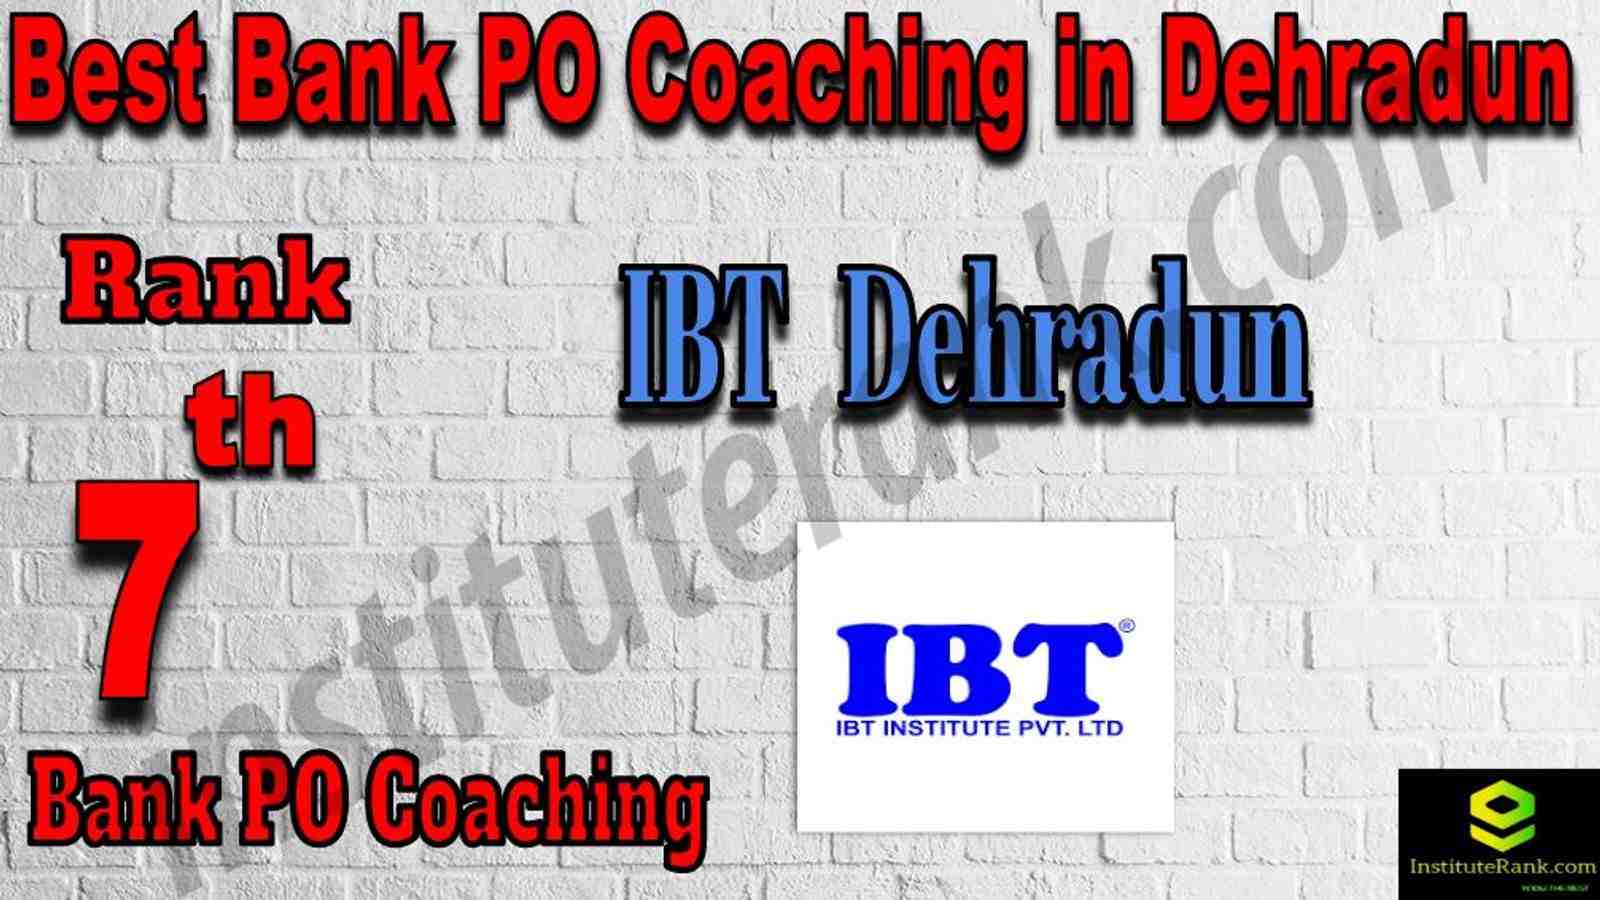 7th Best Bank PO Coaching in Dehradun